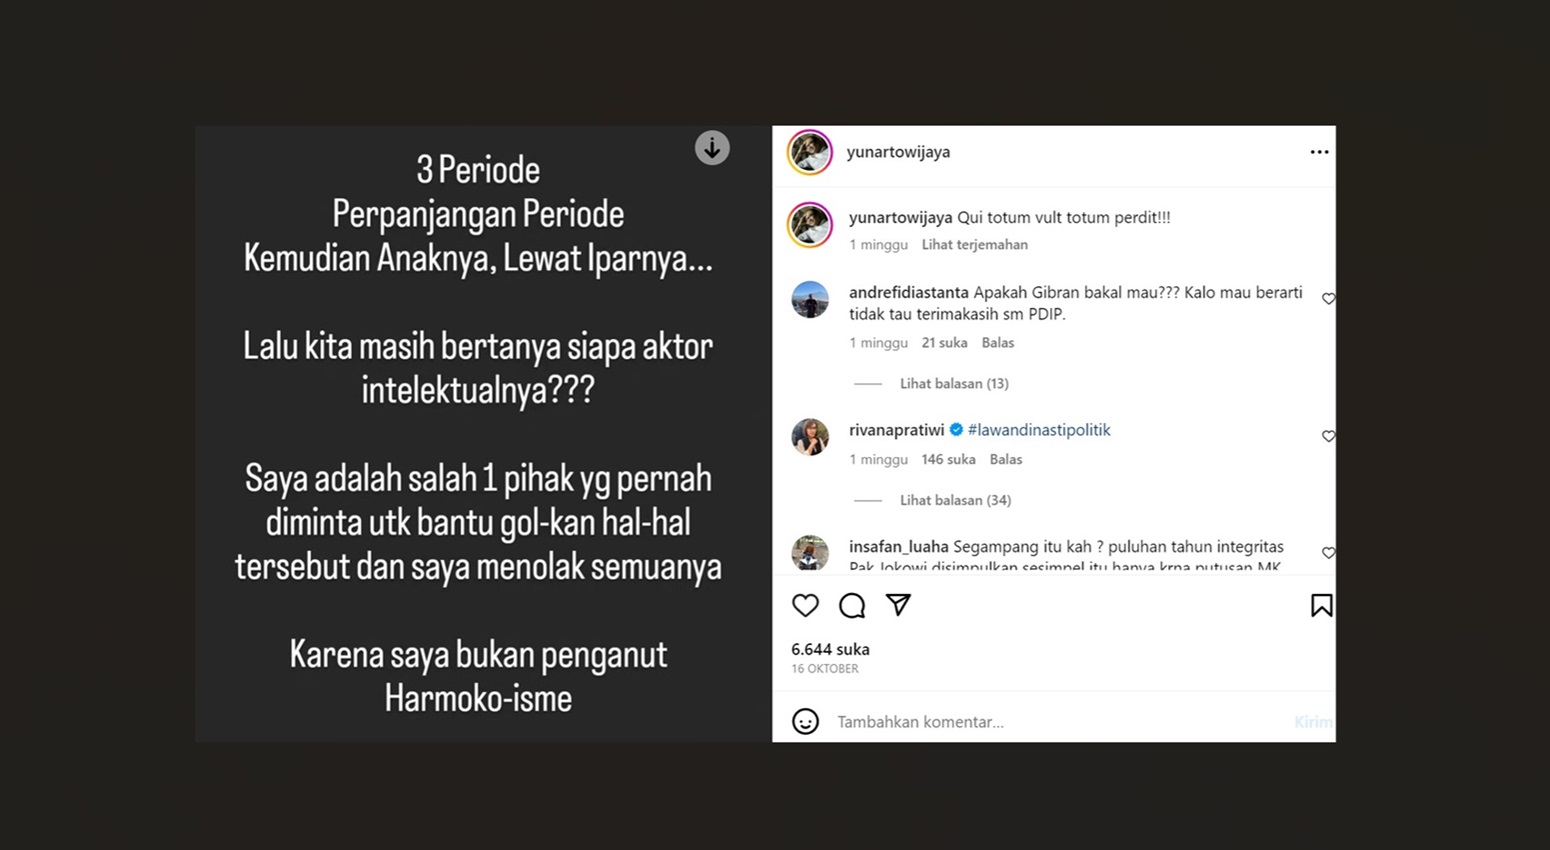 Heboh! Yunarto Wijaya Ngaku Diminta Golkan 3 Periode: Kemudian Anaknya, Iparnya, Masih Bertanya Siapa Aktor Intelektualnya?